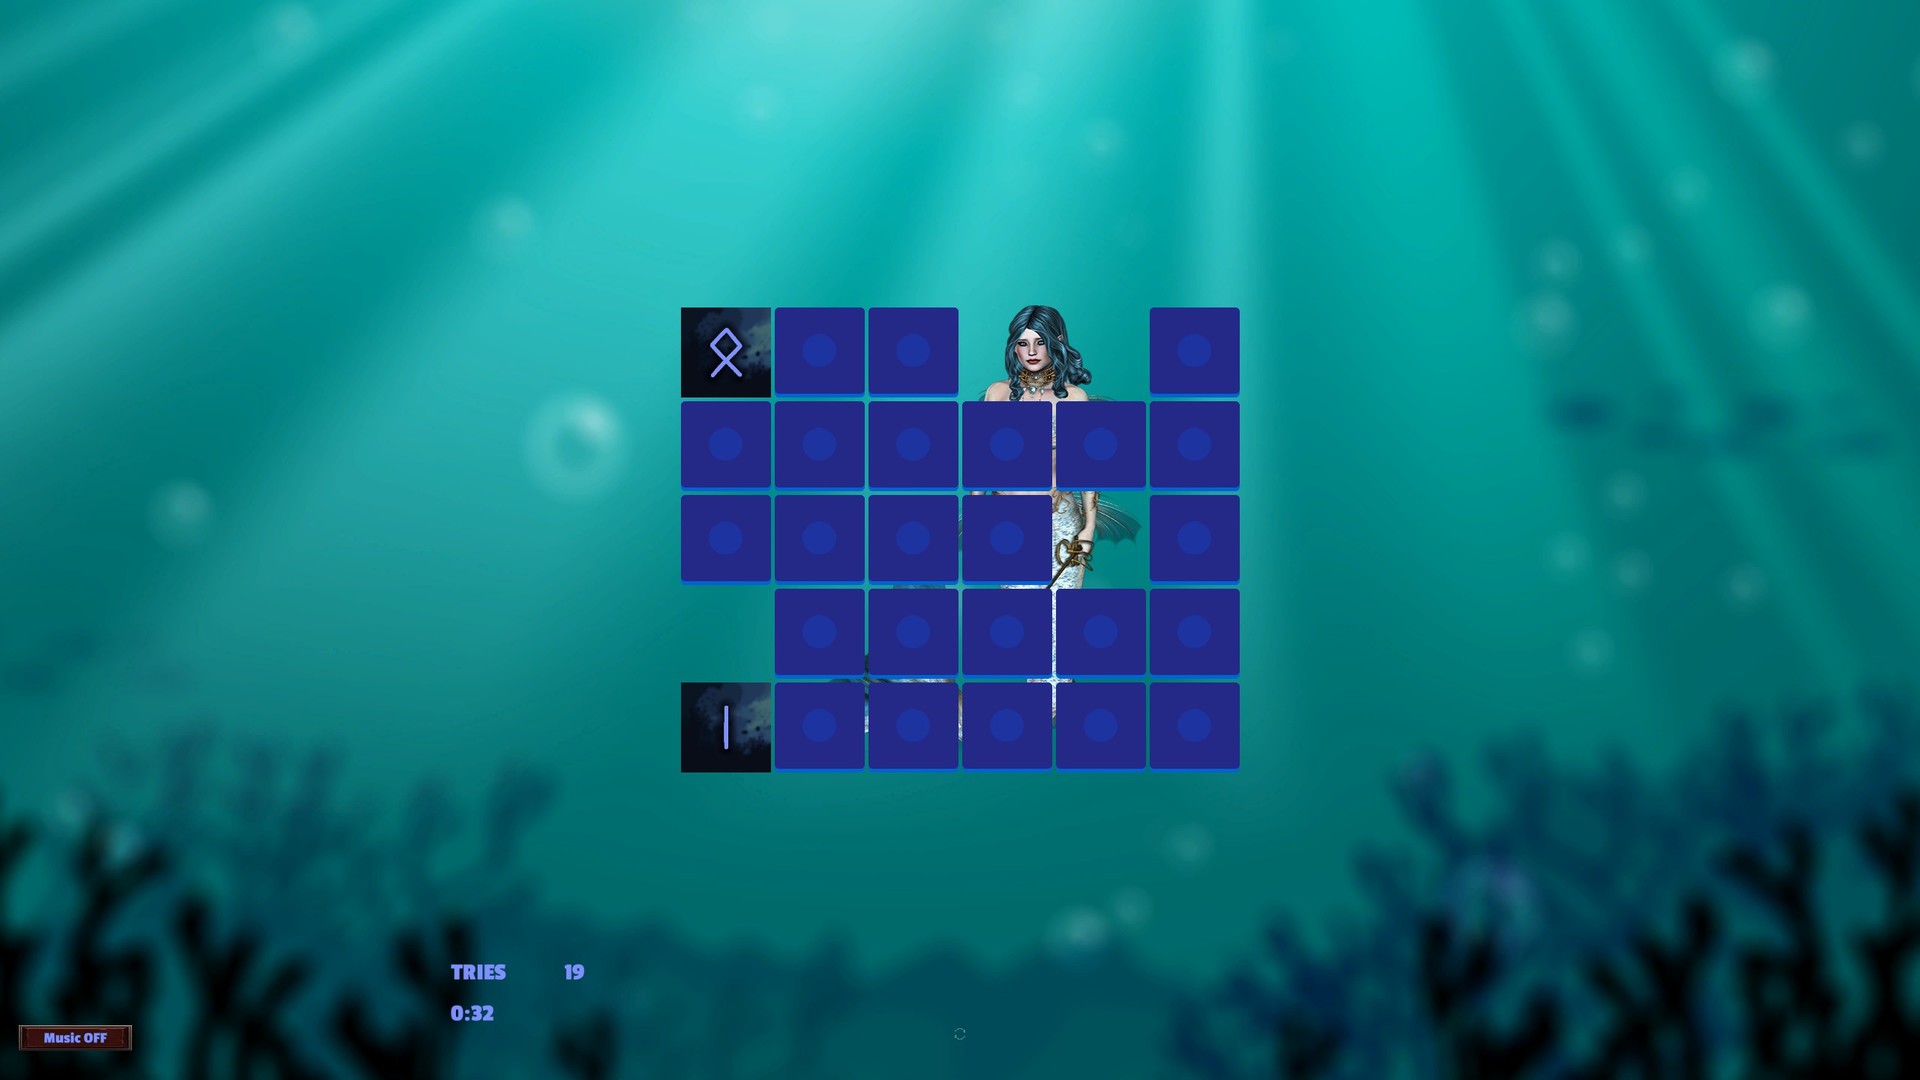 Memory Puzzle - Mystery Mermaids + Artbook DLC Steam CD Key